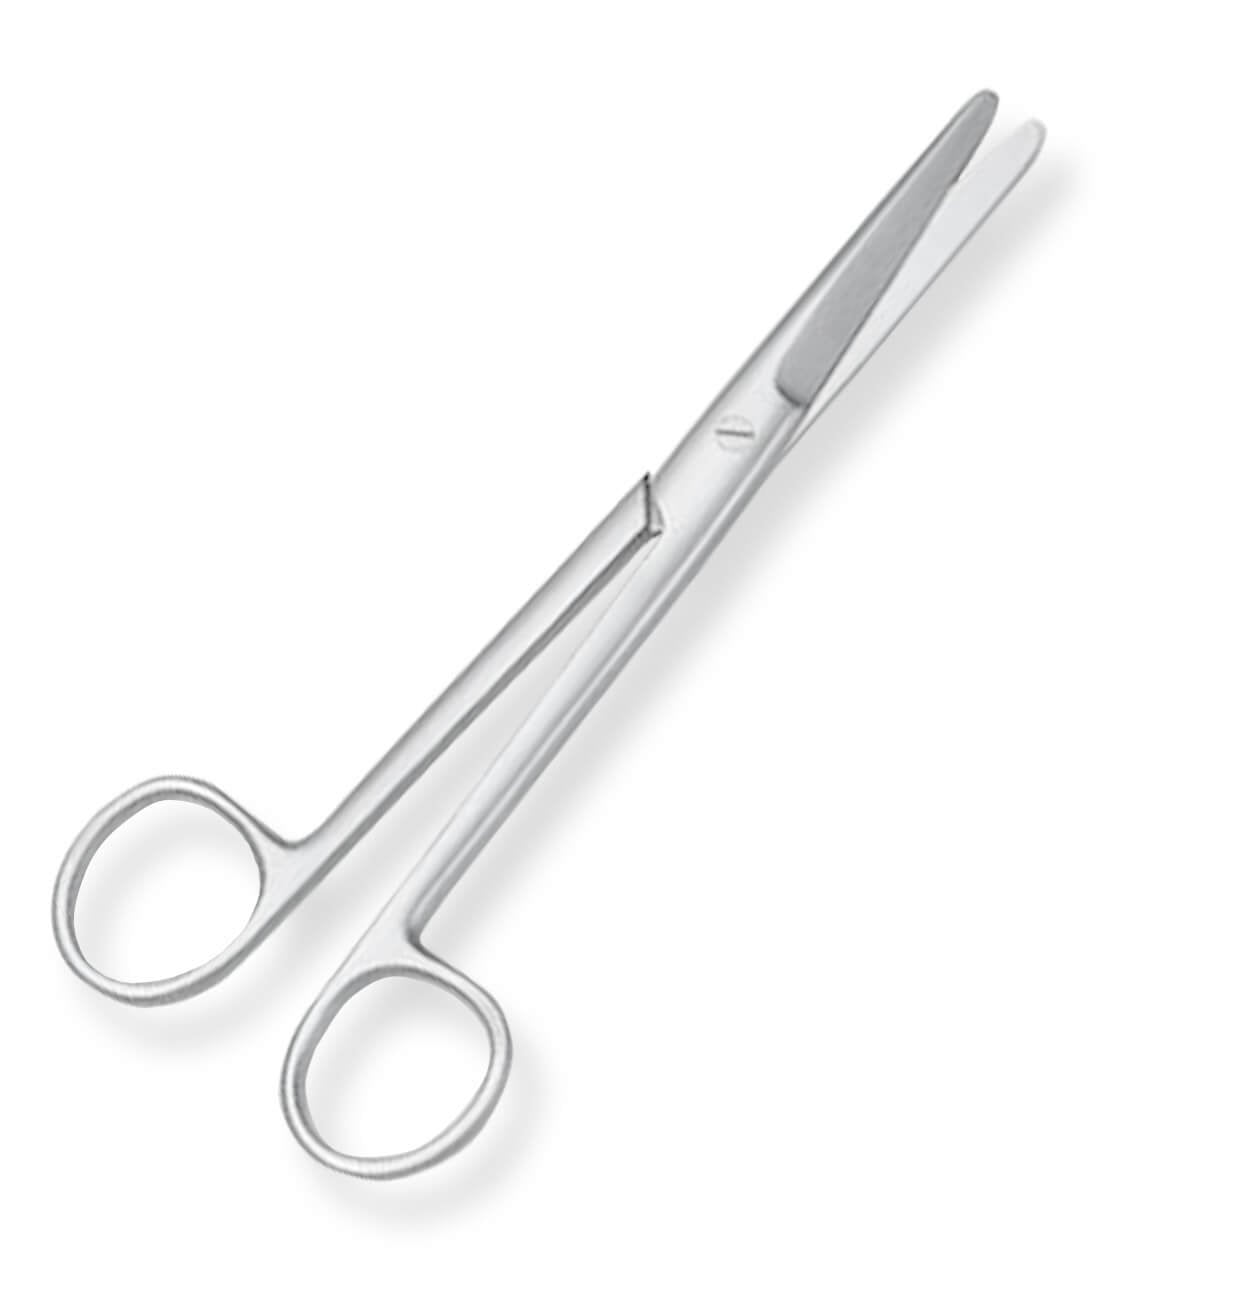 dissection scissors